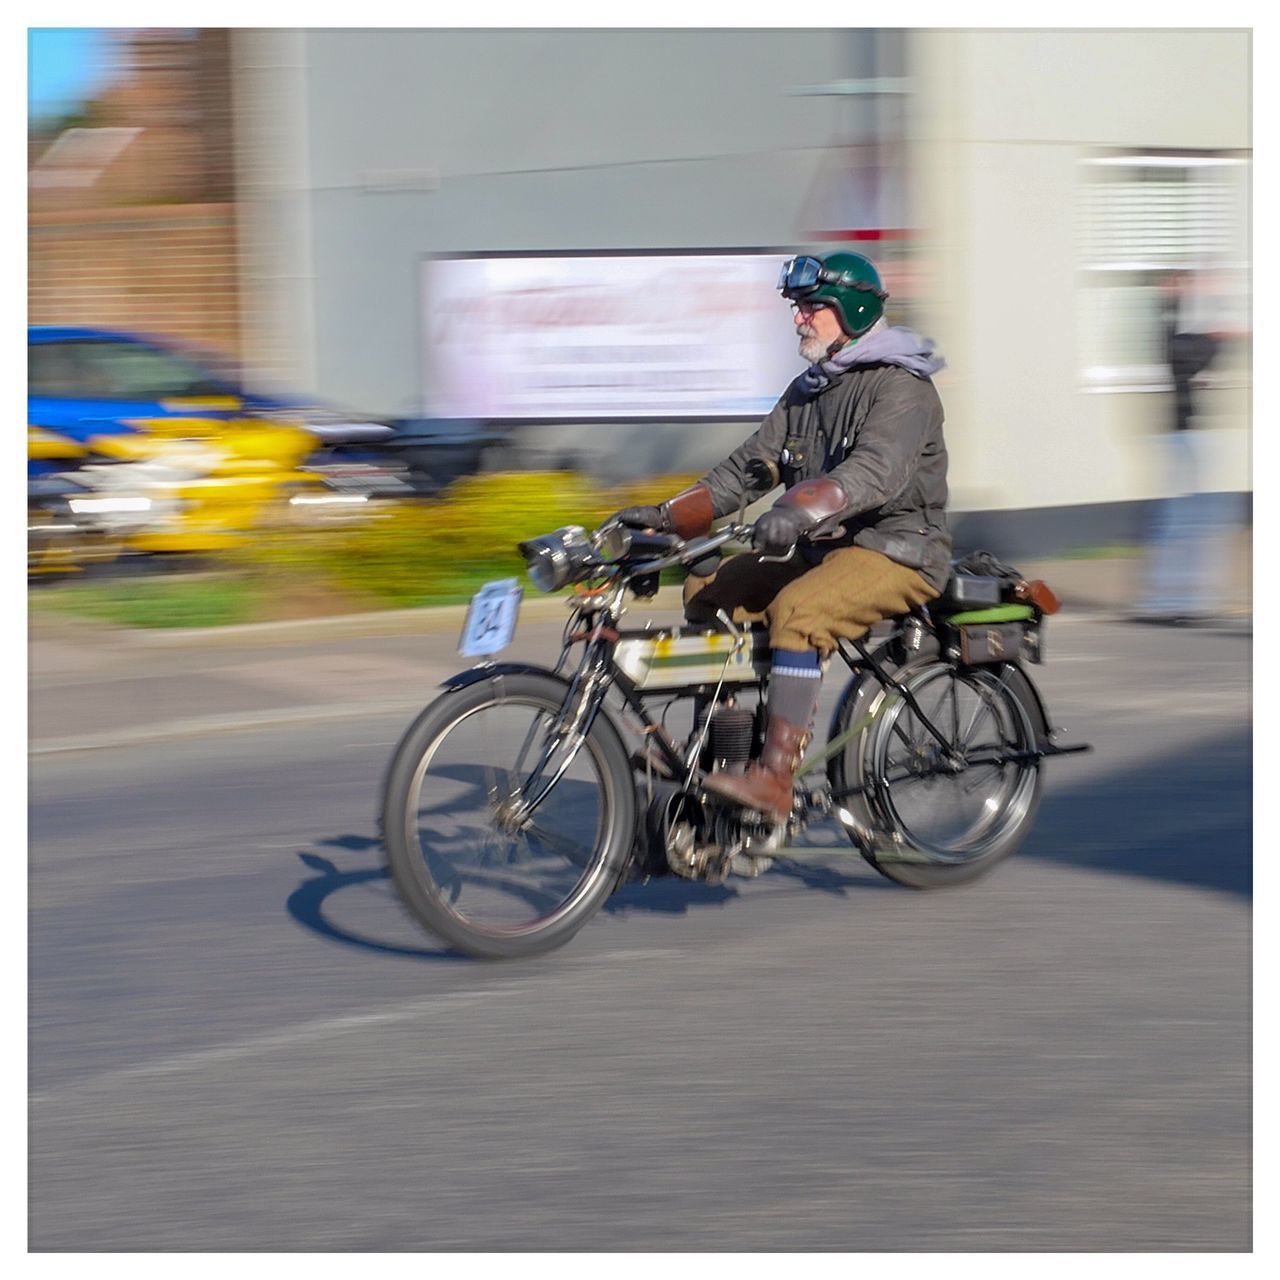 MAN RIDING BICYCLE ON STREET